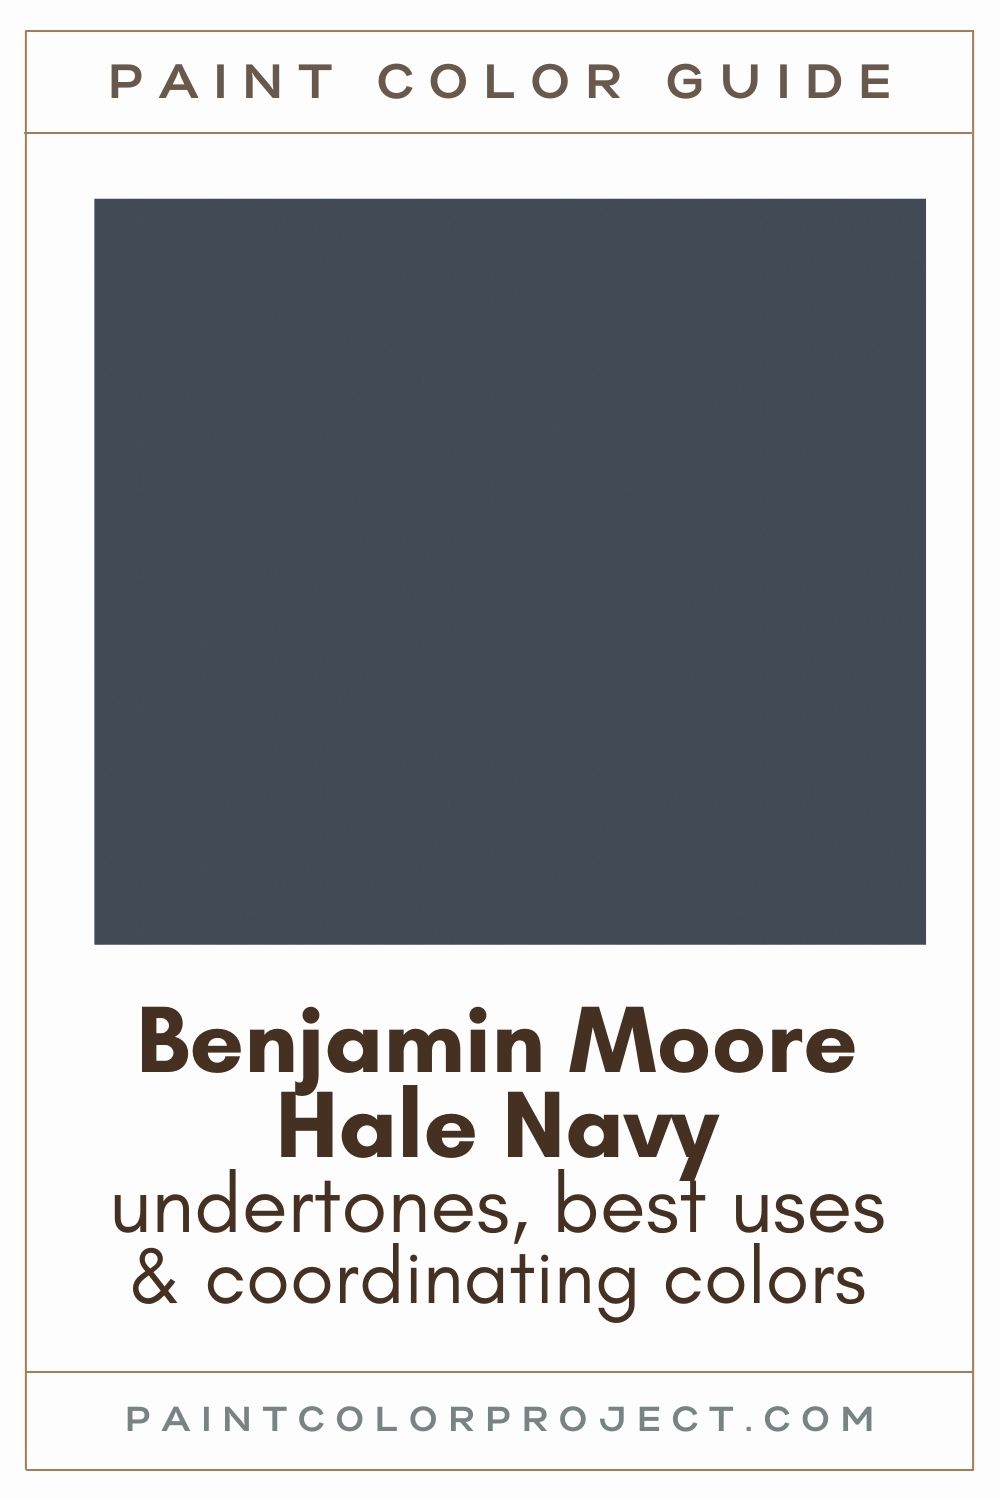 Benjamin Moore Hale Navy Paint Color Guide.